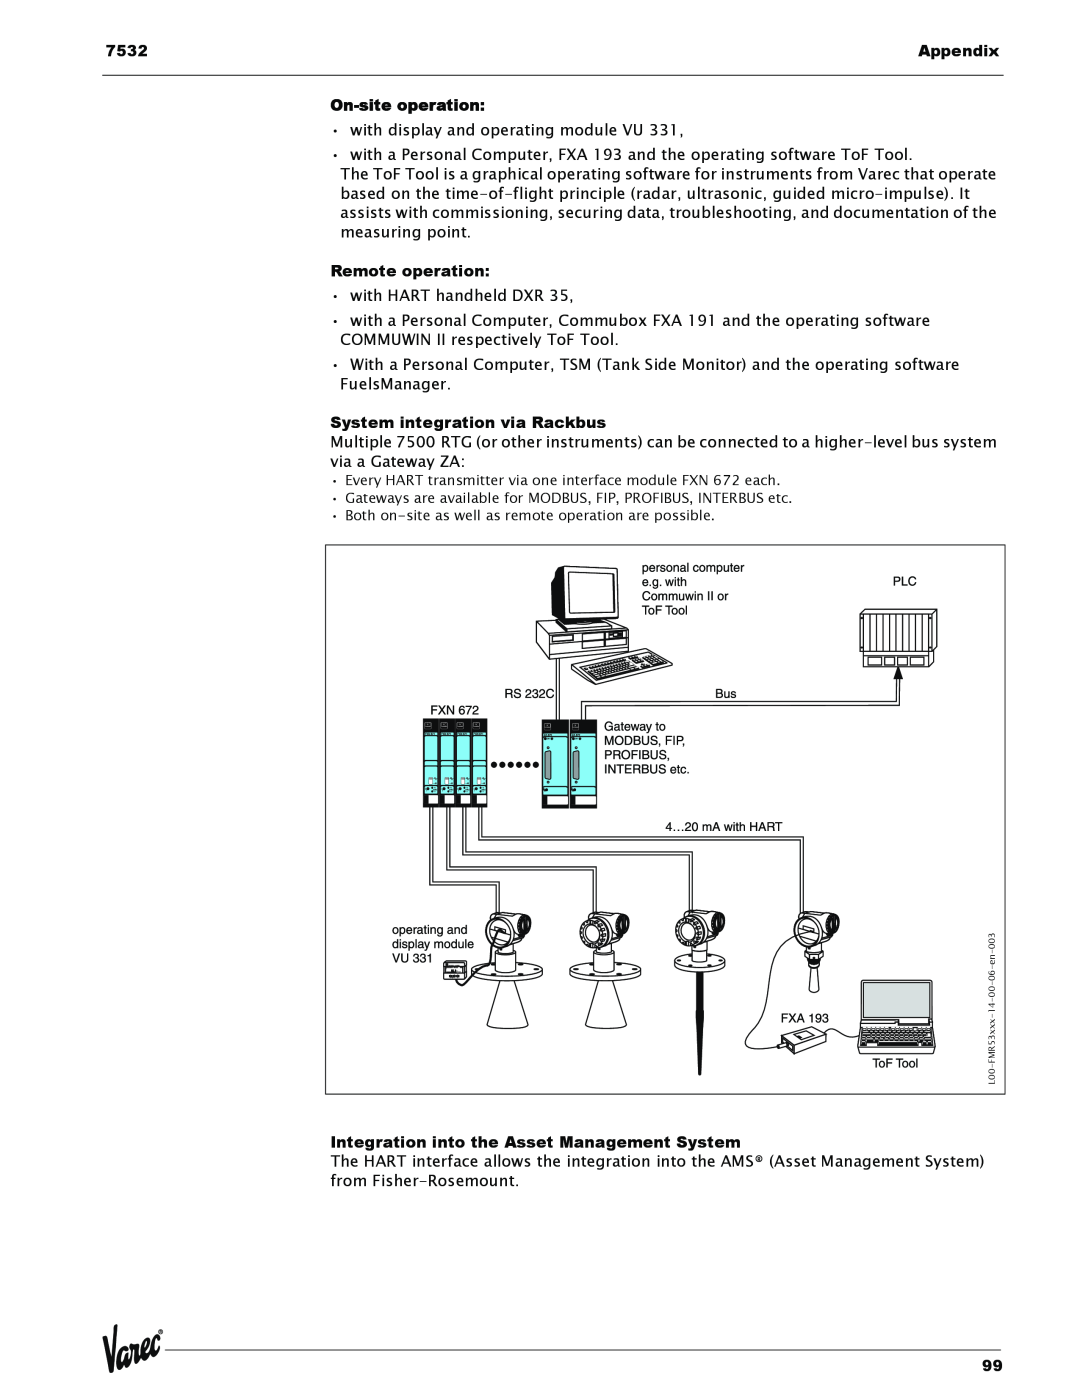 Lightning Audio 7532 manual Appendix, On-siteoperation, Remote operation, System integration via Rackbus 